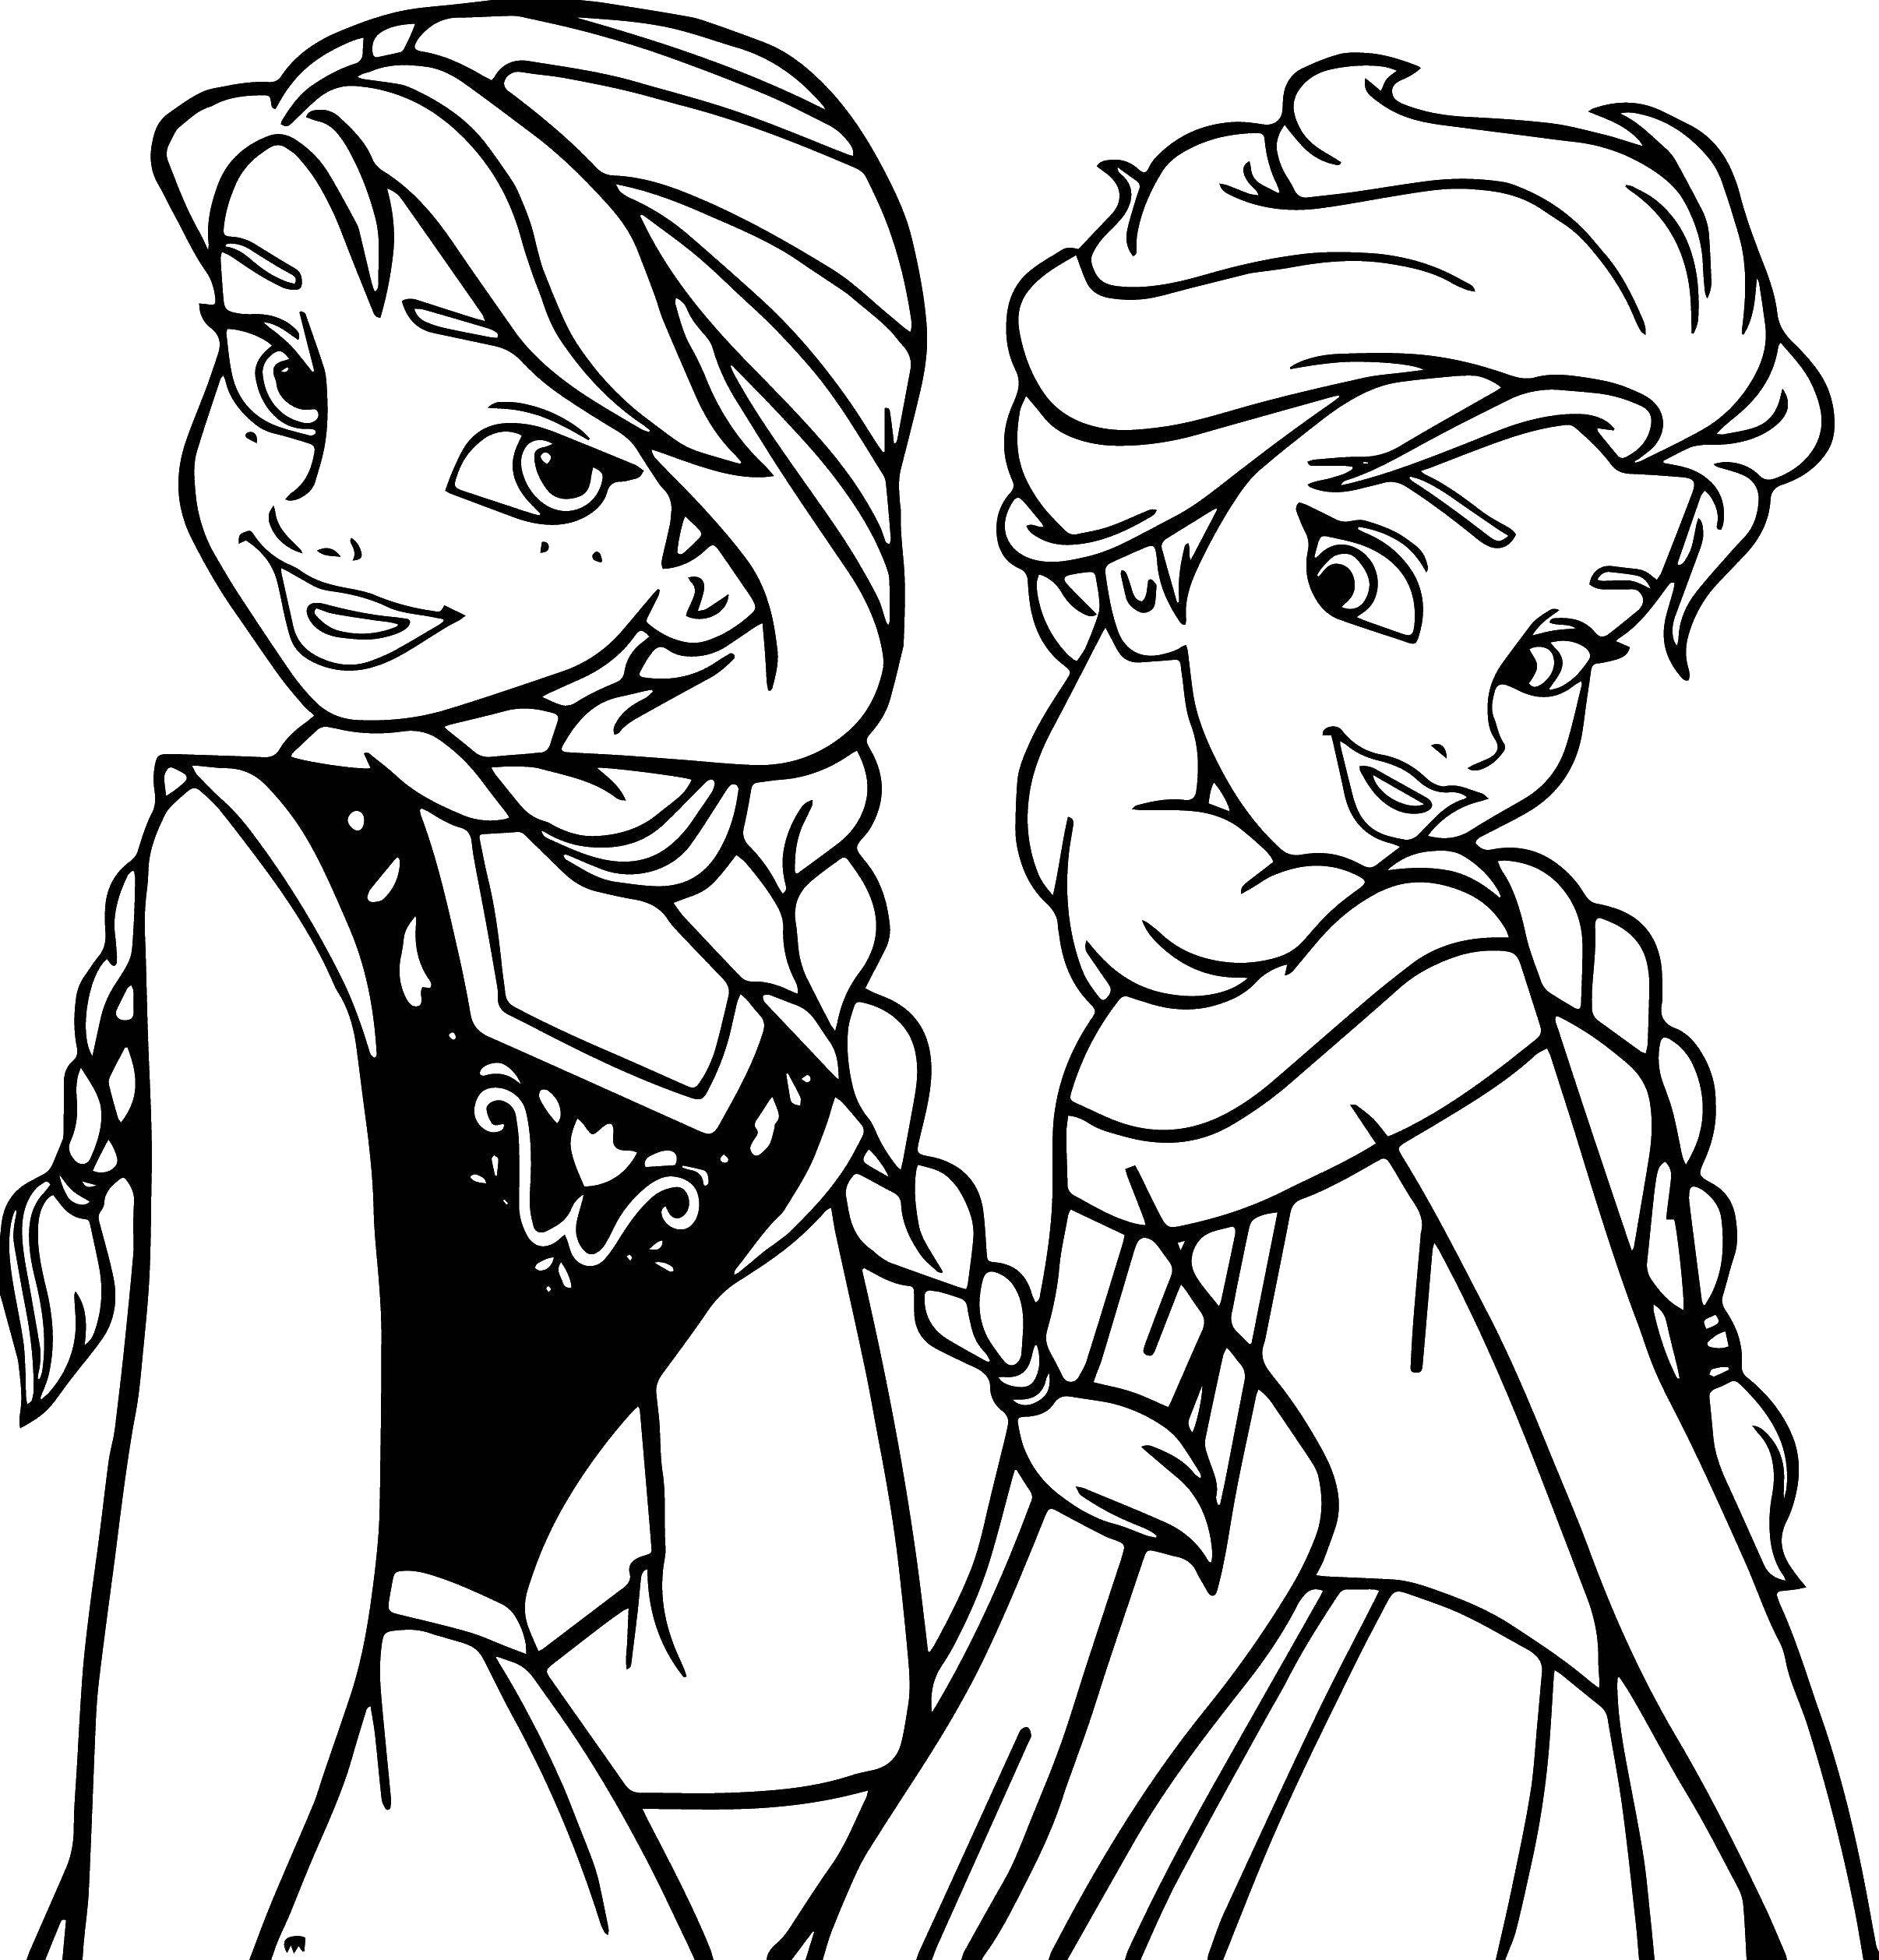 Coloring Anna and sister Elsa. Category Disney cartoons. Tags:  Disney, Elsa, frozen, Princess.